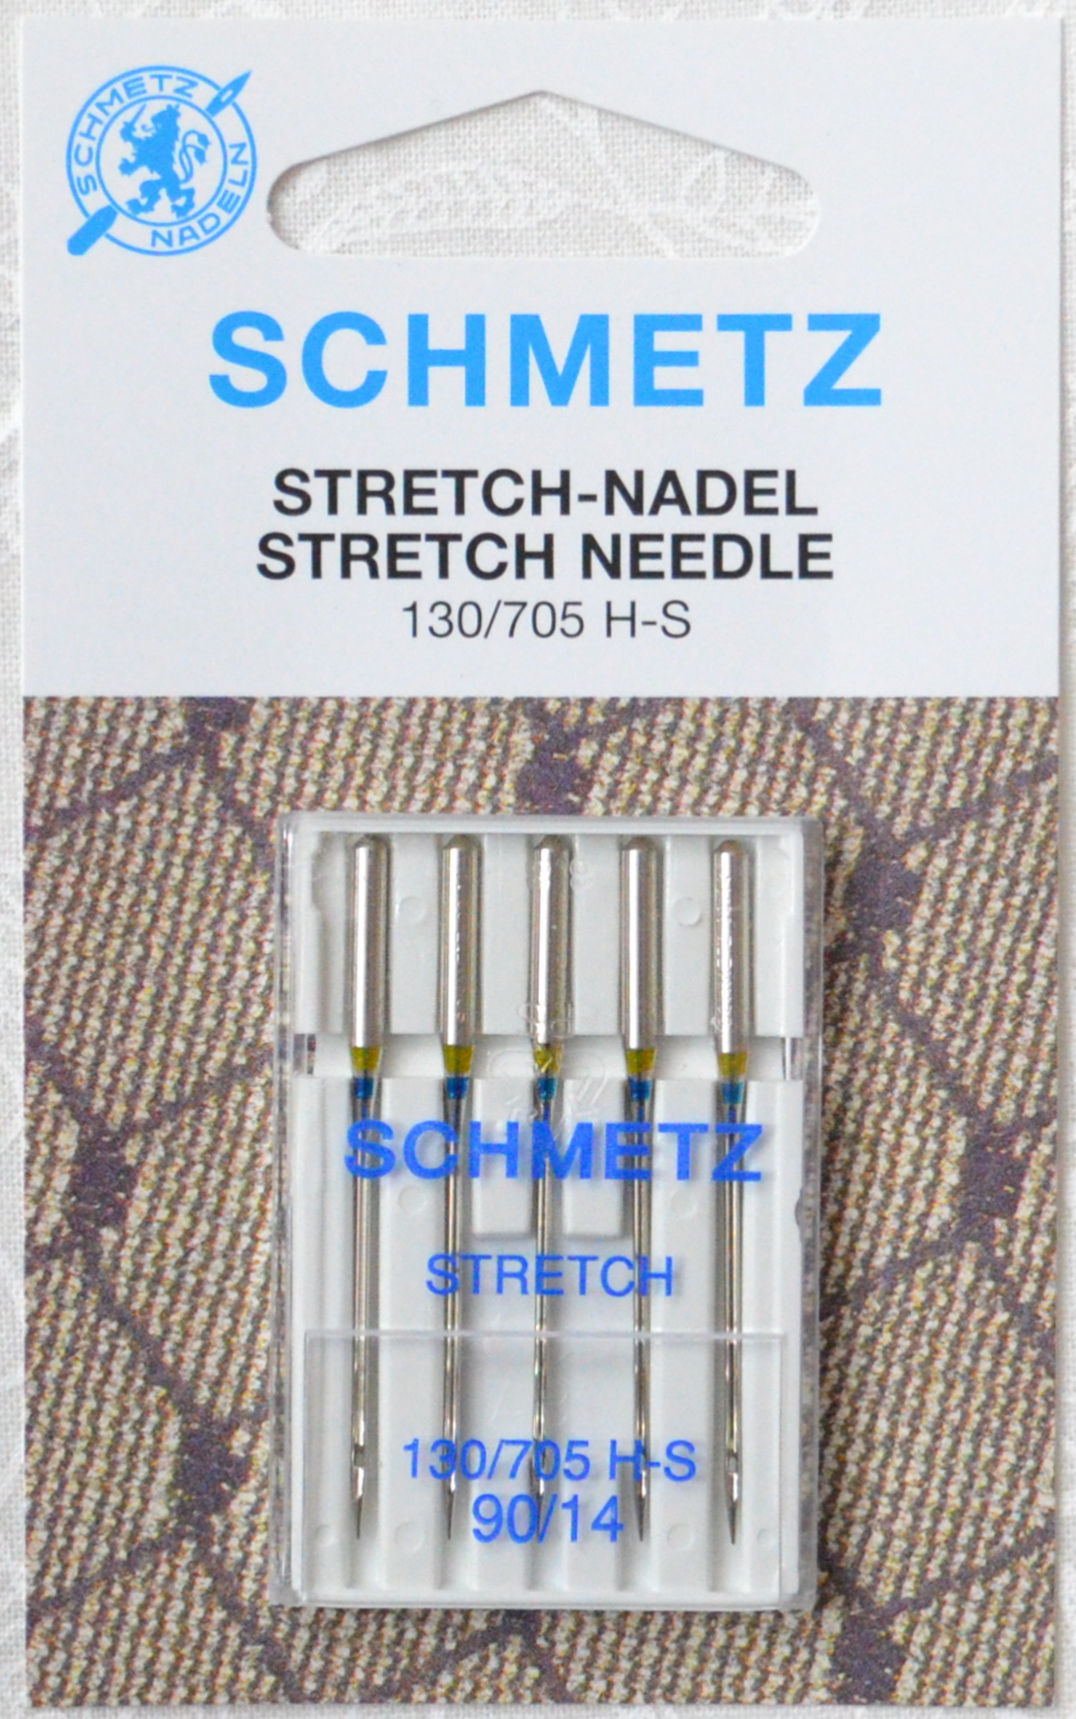 Thickest - Various Sizes Packs of 5 Schmetz STRETCH Needle Range 90/14 